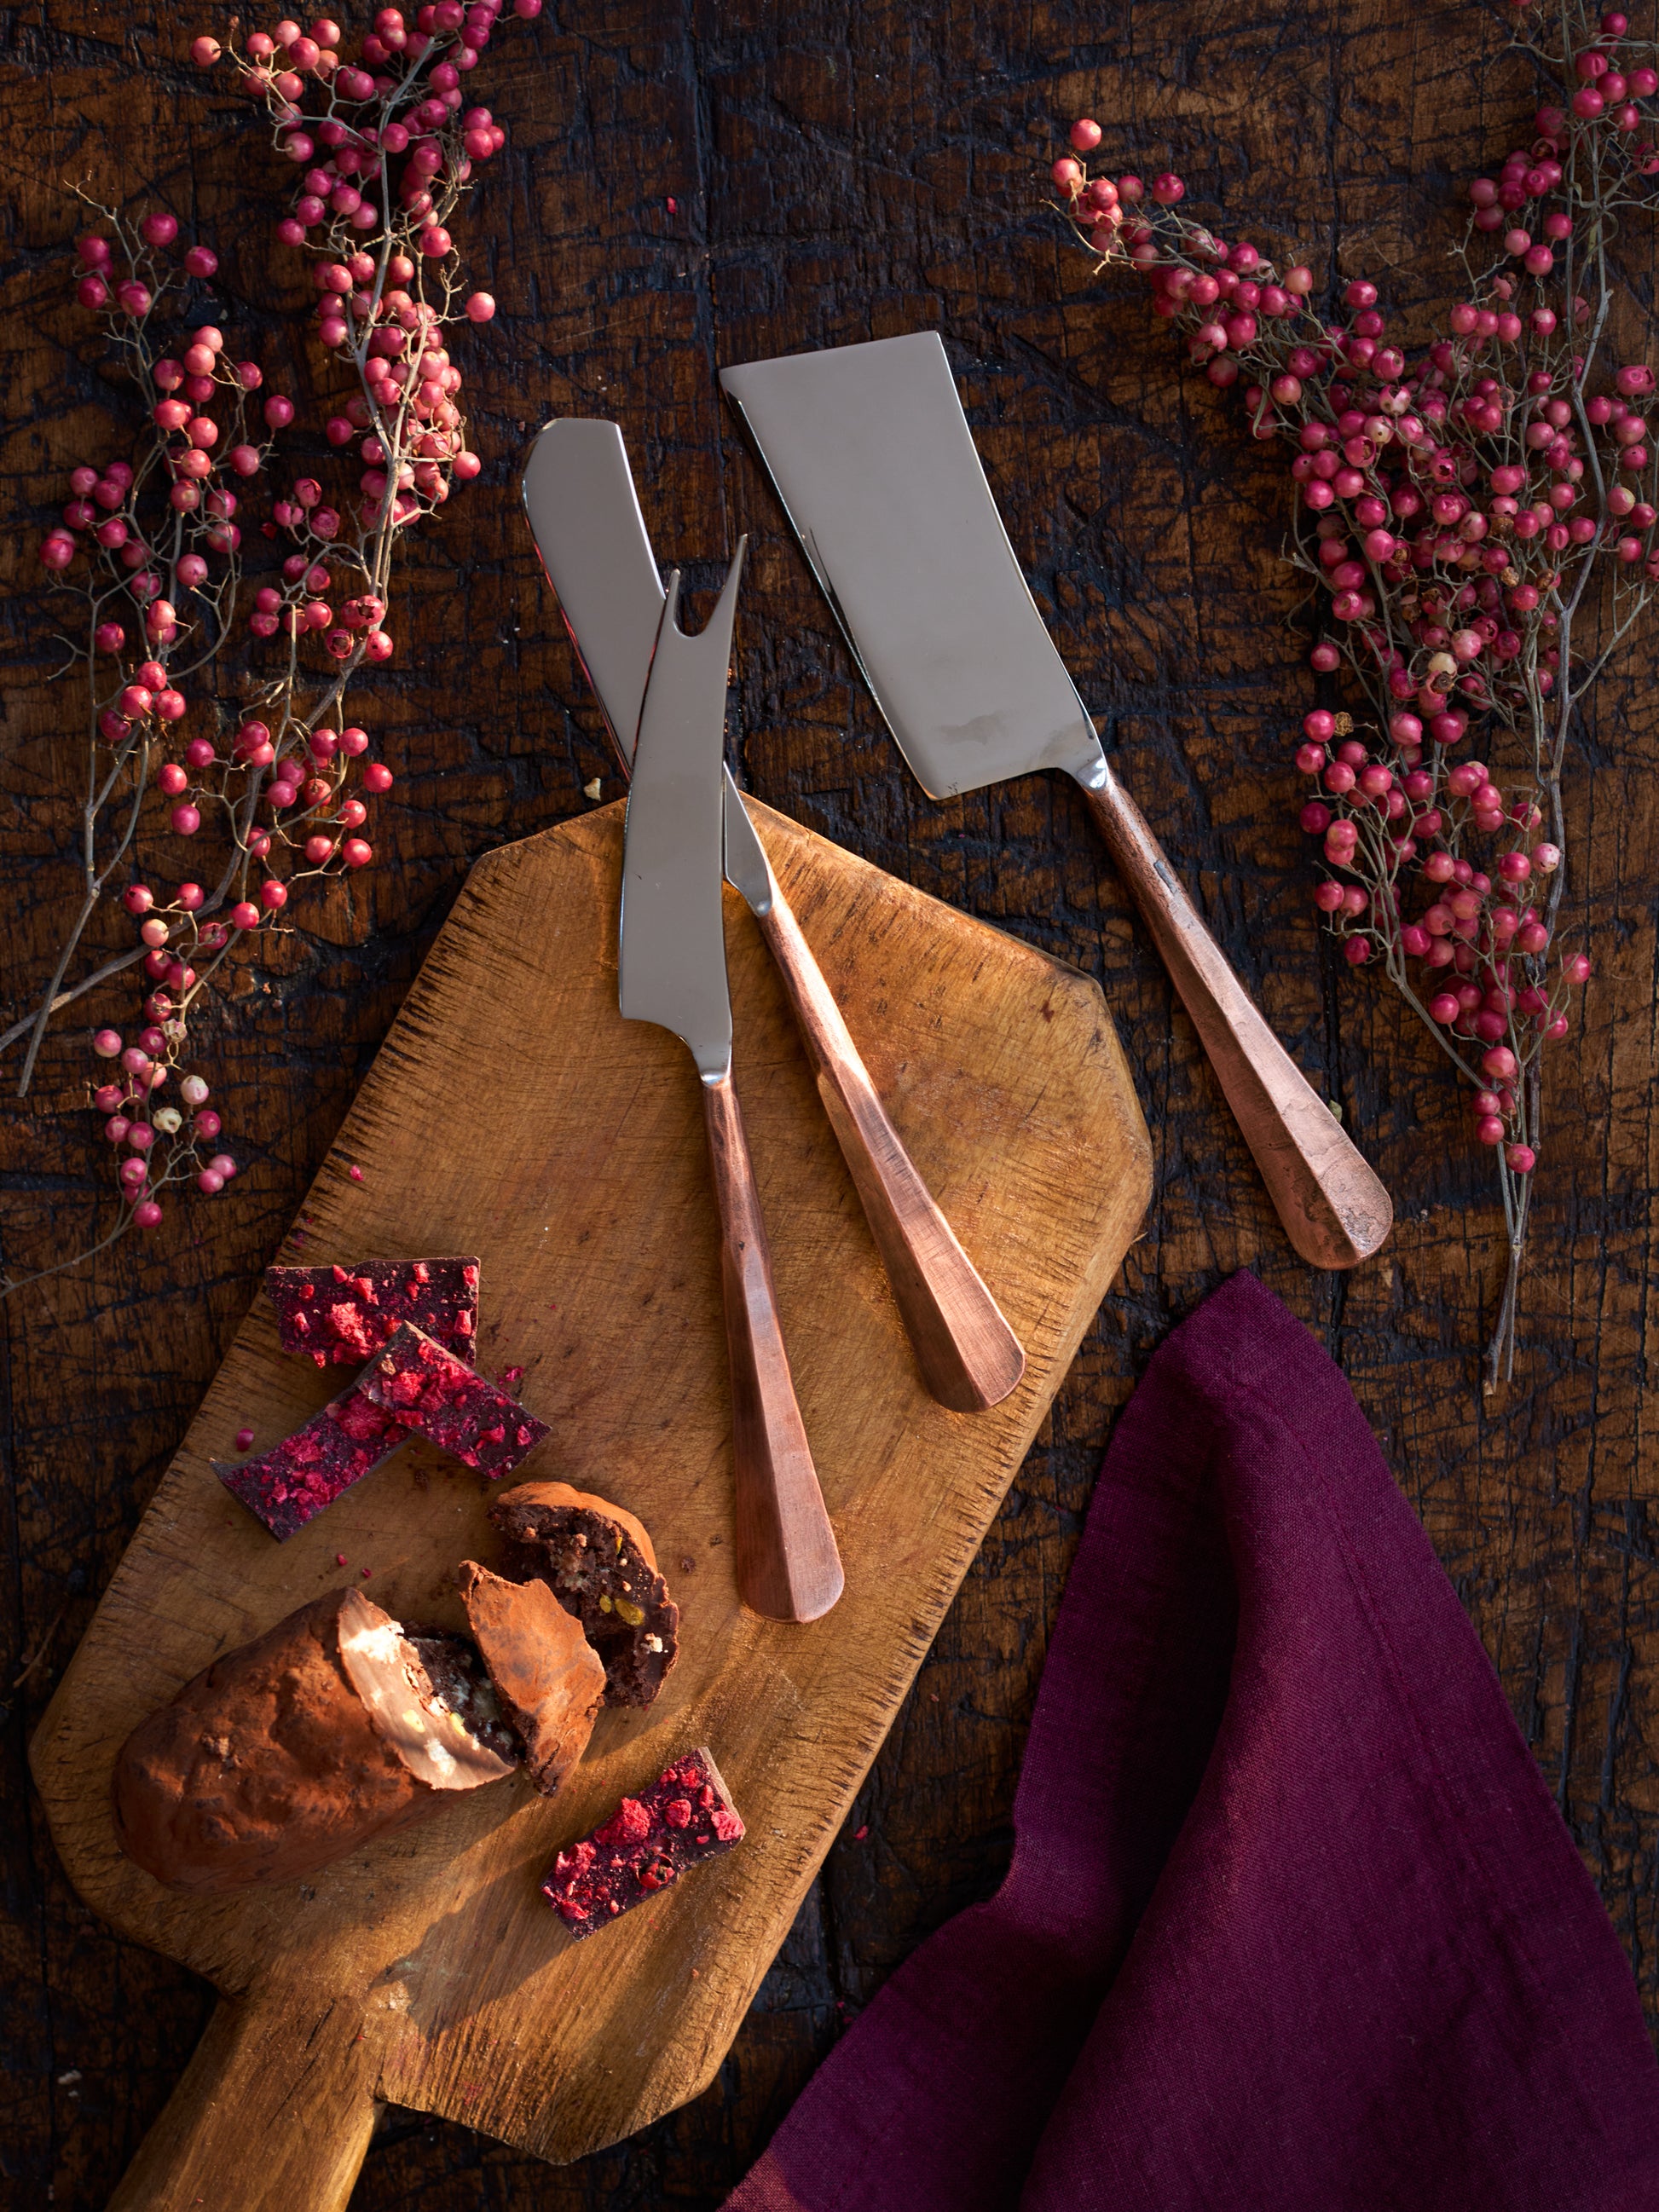 Fancy Cheese Knife Set – Scope Kitchen